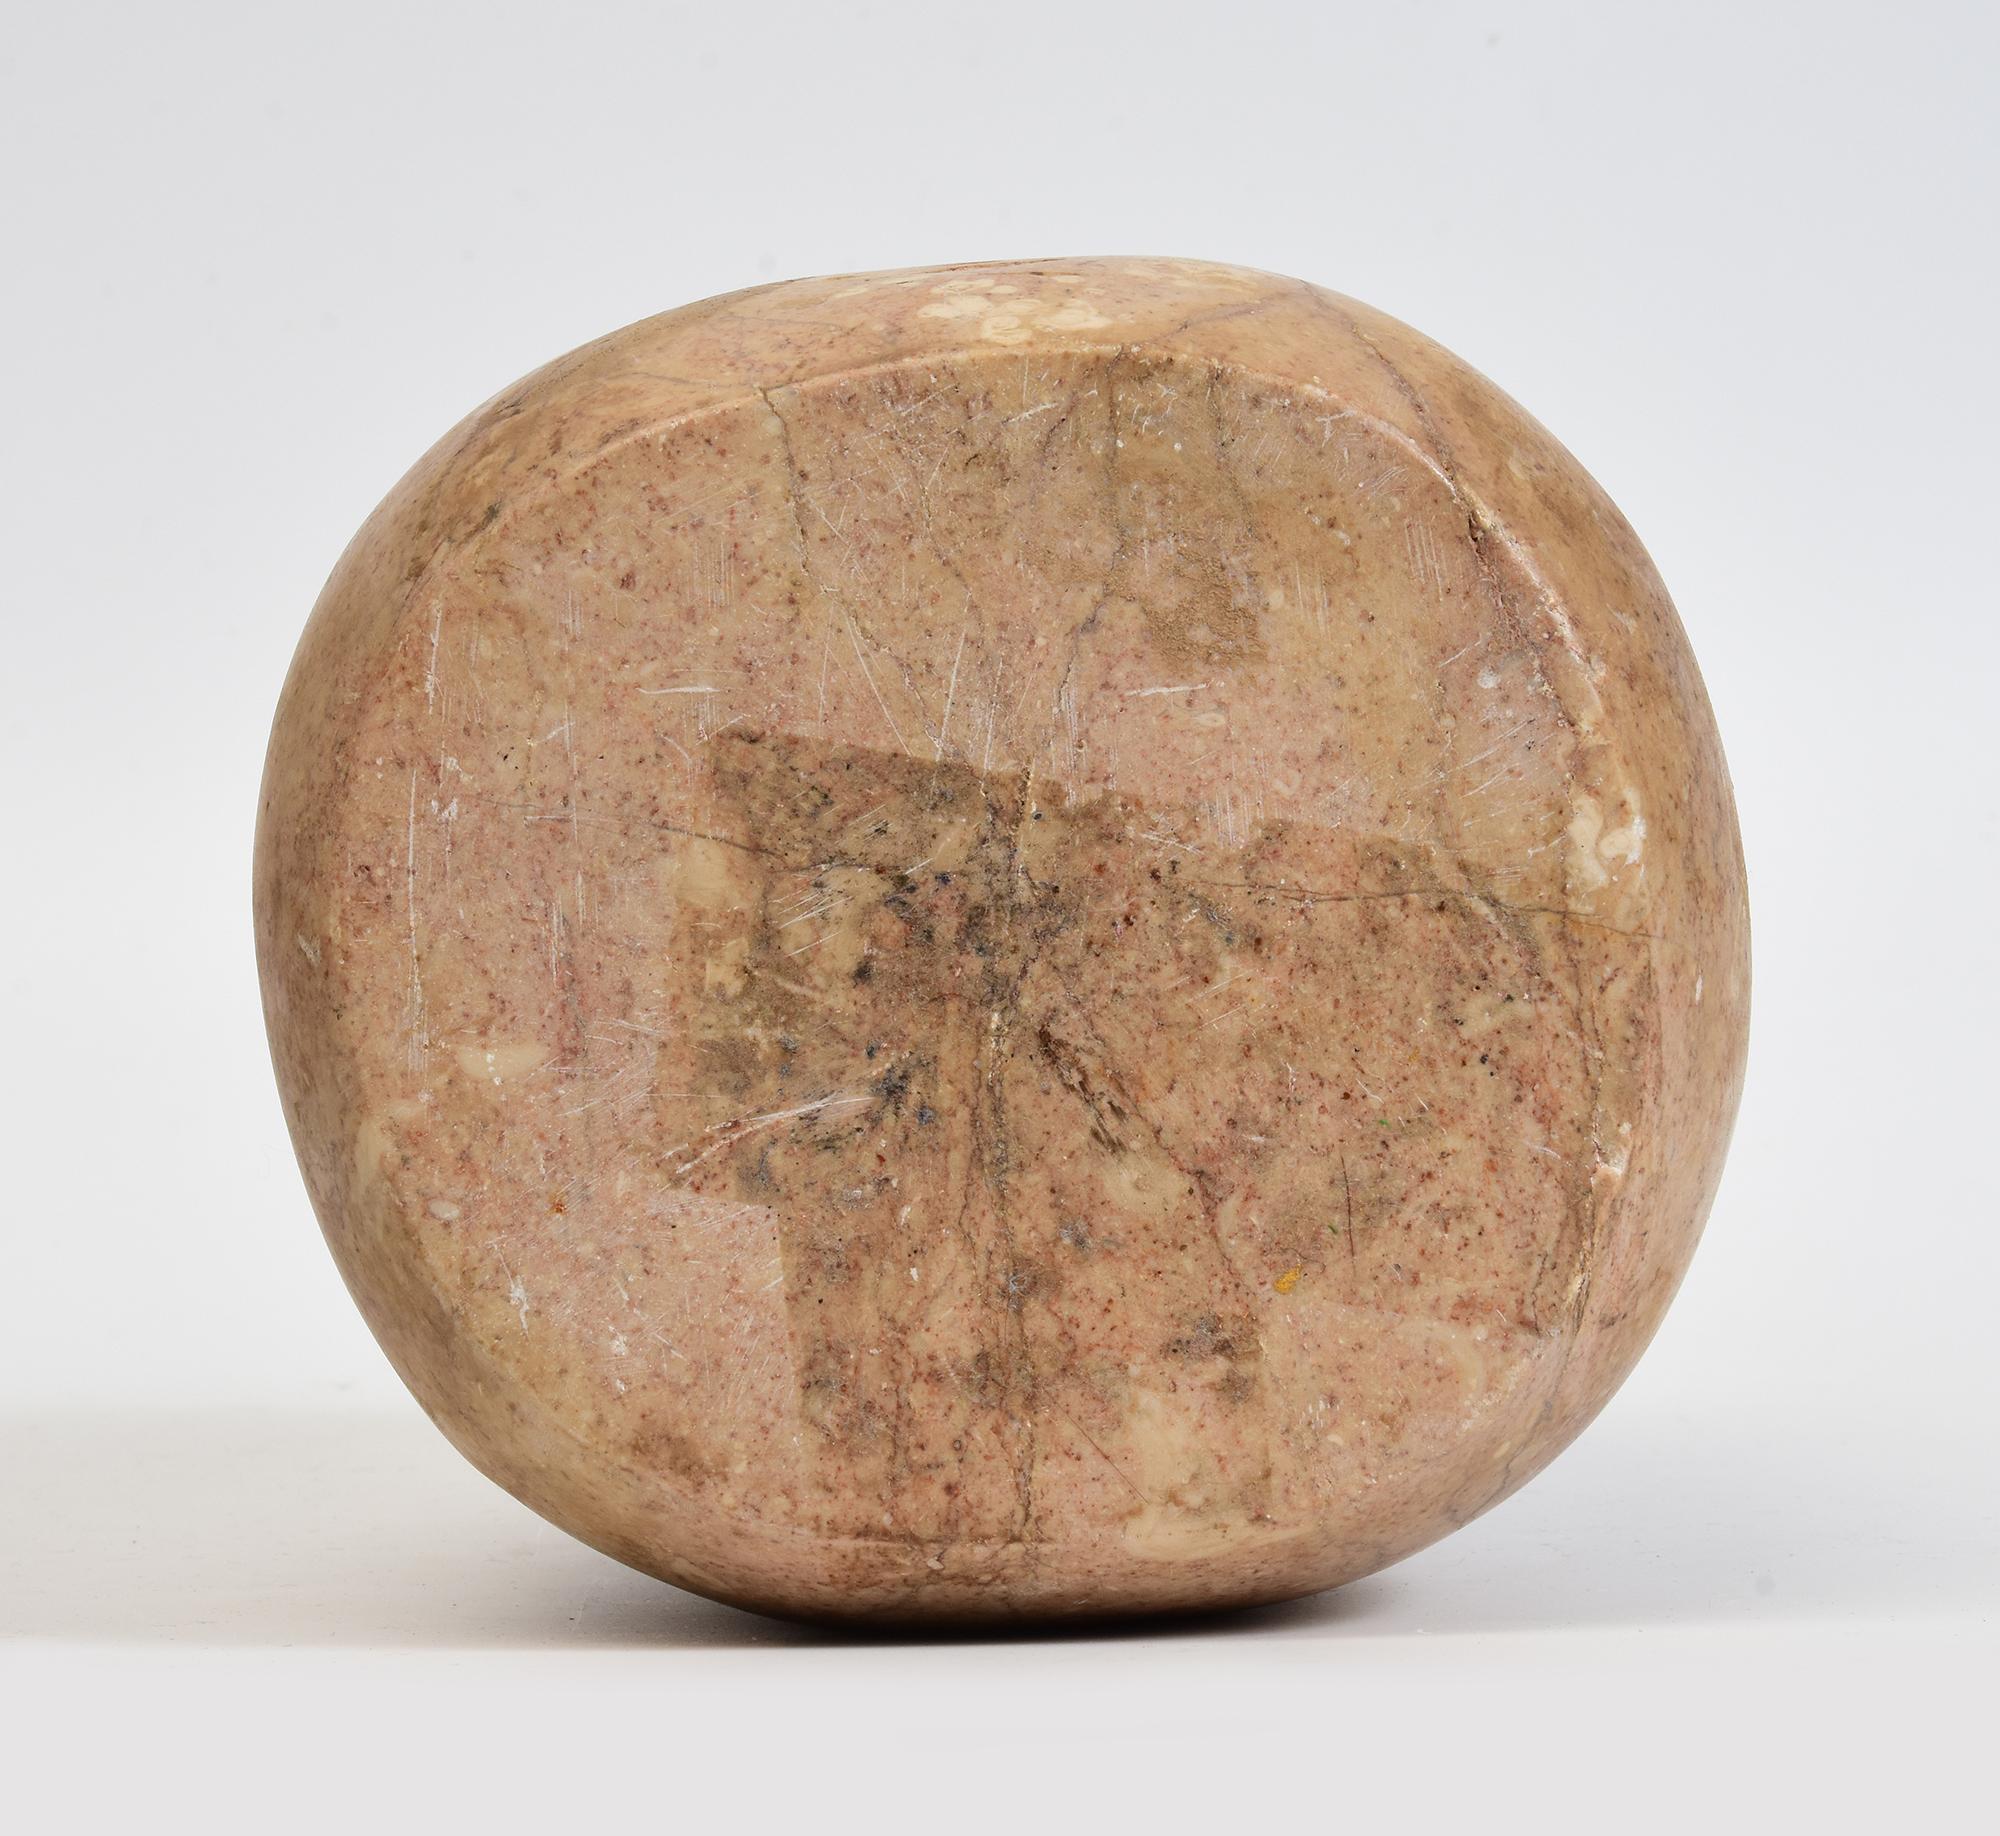 2-3 B.C., Afghanistan, Rare Bactrian Hardstone Weight 7